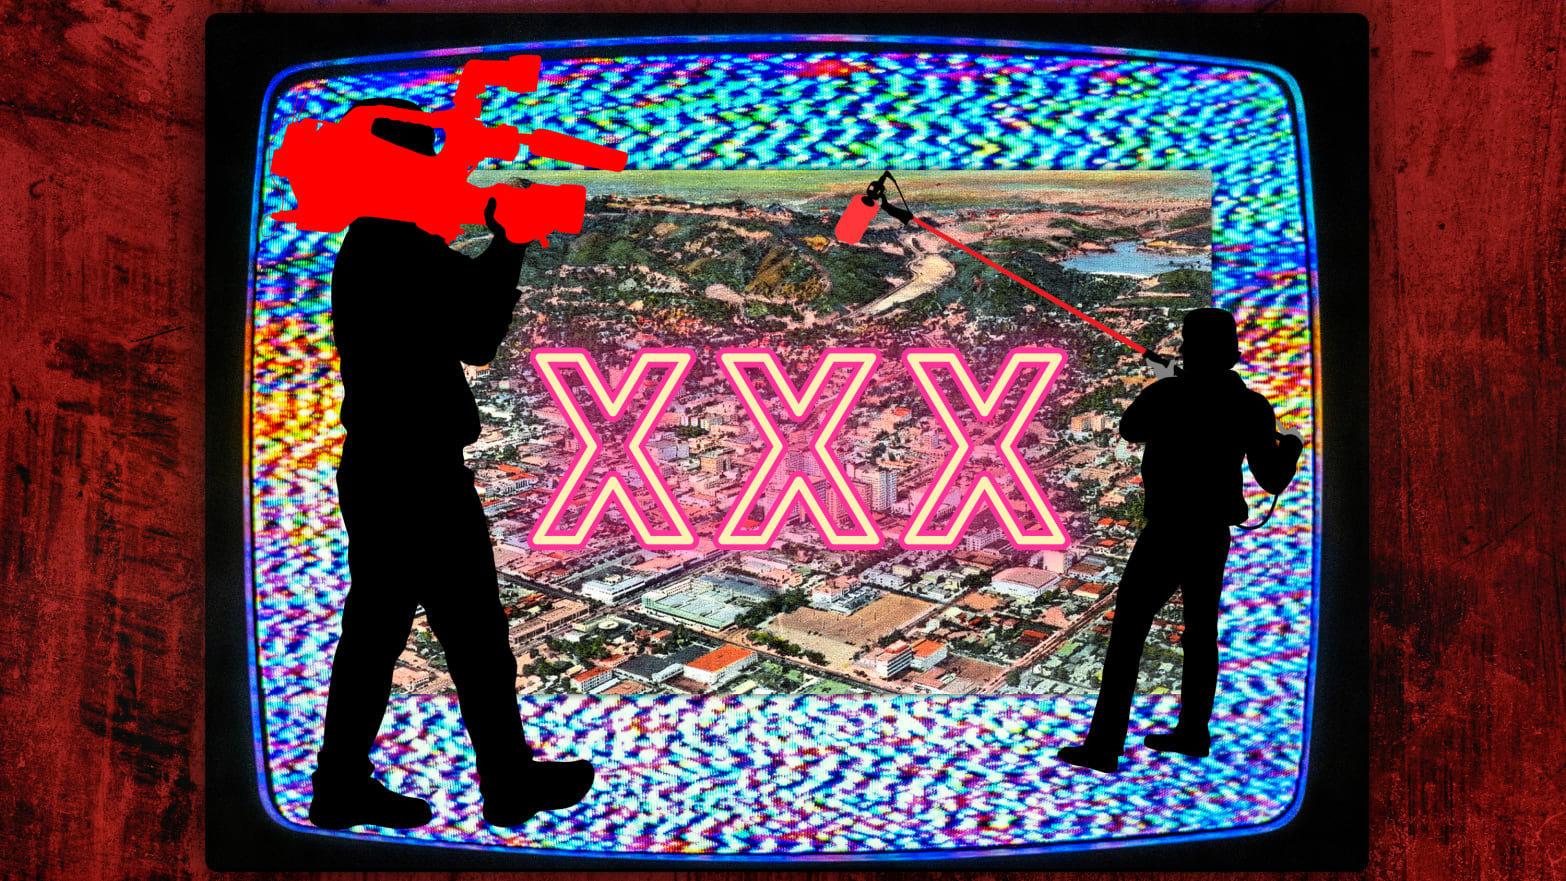 Xxx Xxvii 2020 - Los Angeles Real Estate Tycoon Mark Handel Exposed as 'Boogeyman of Porn'  Khan Tusion